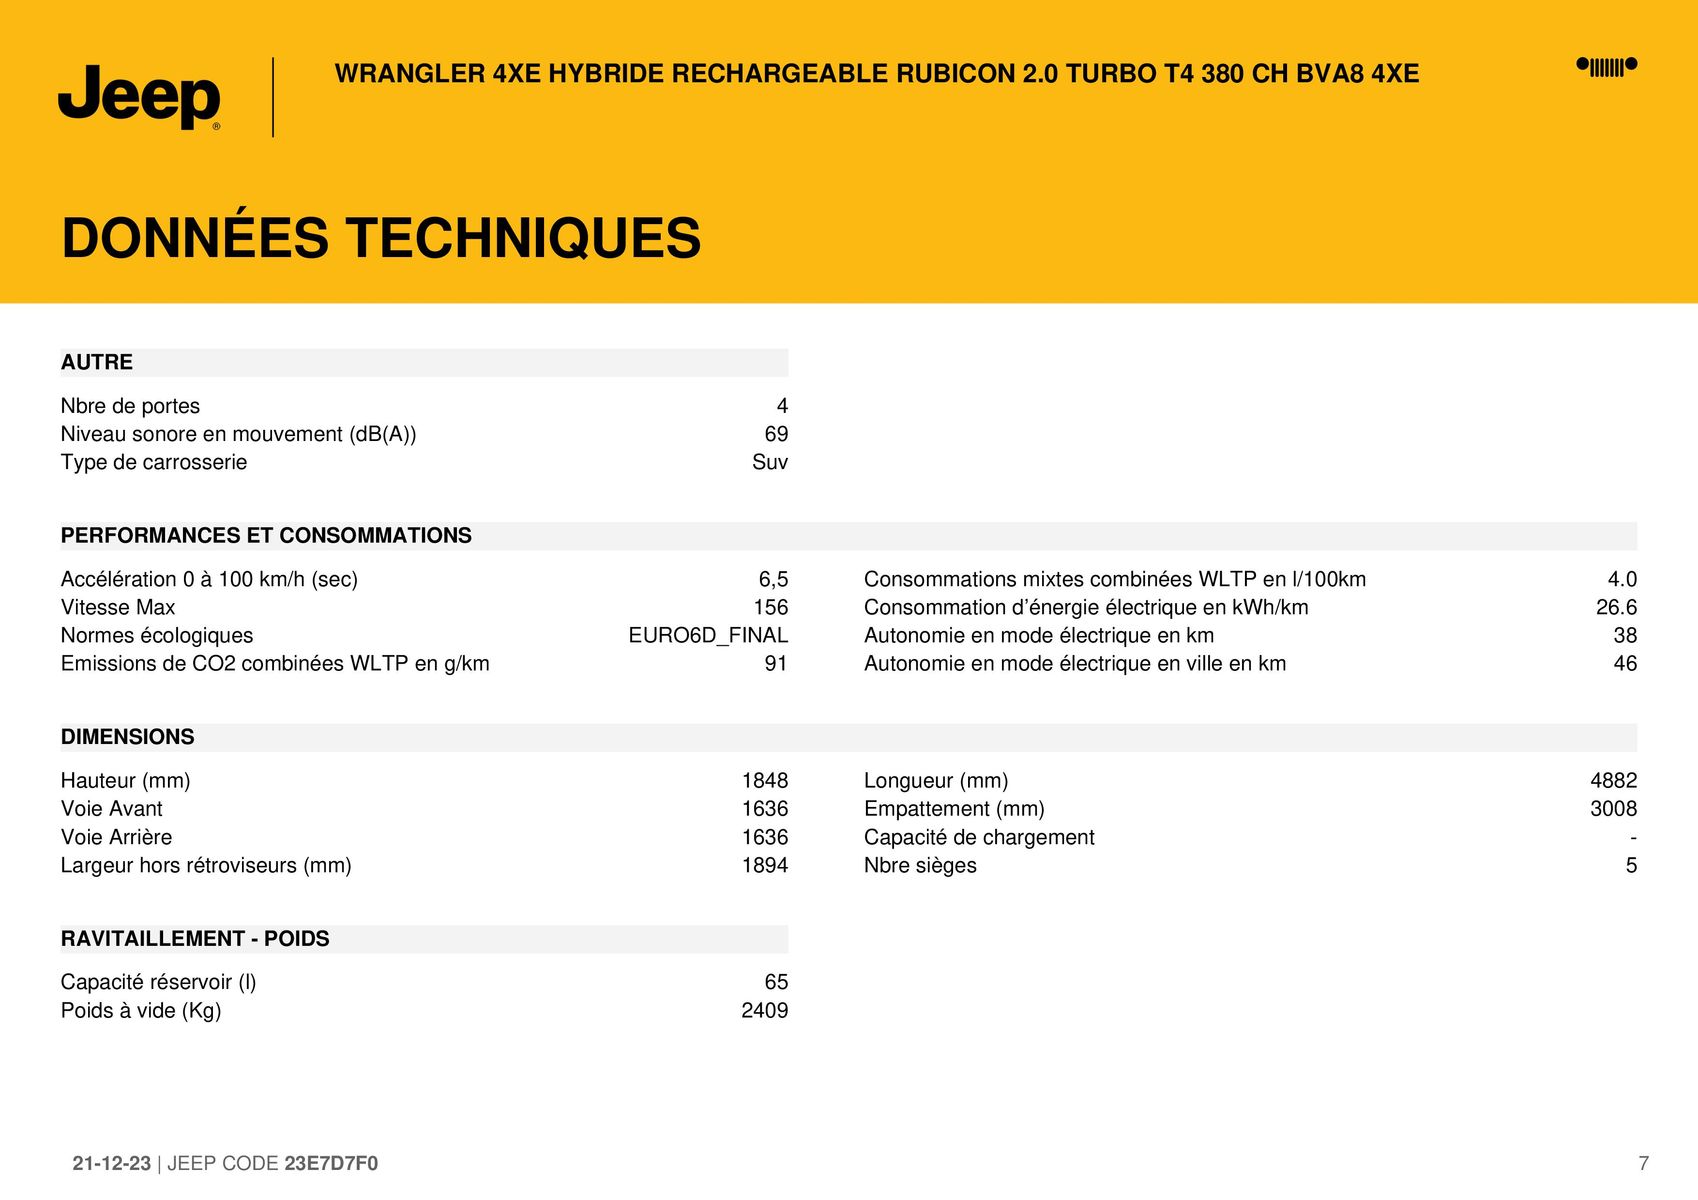 Catalogue WRANGLER 4XE HYBRIDE RECHARGEABLE RUBICON 2.0 TURBO T4 380 CH BVA8 4XE^, page 00007